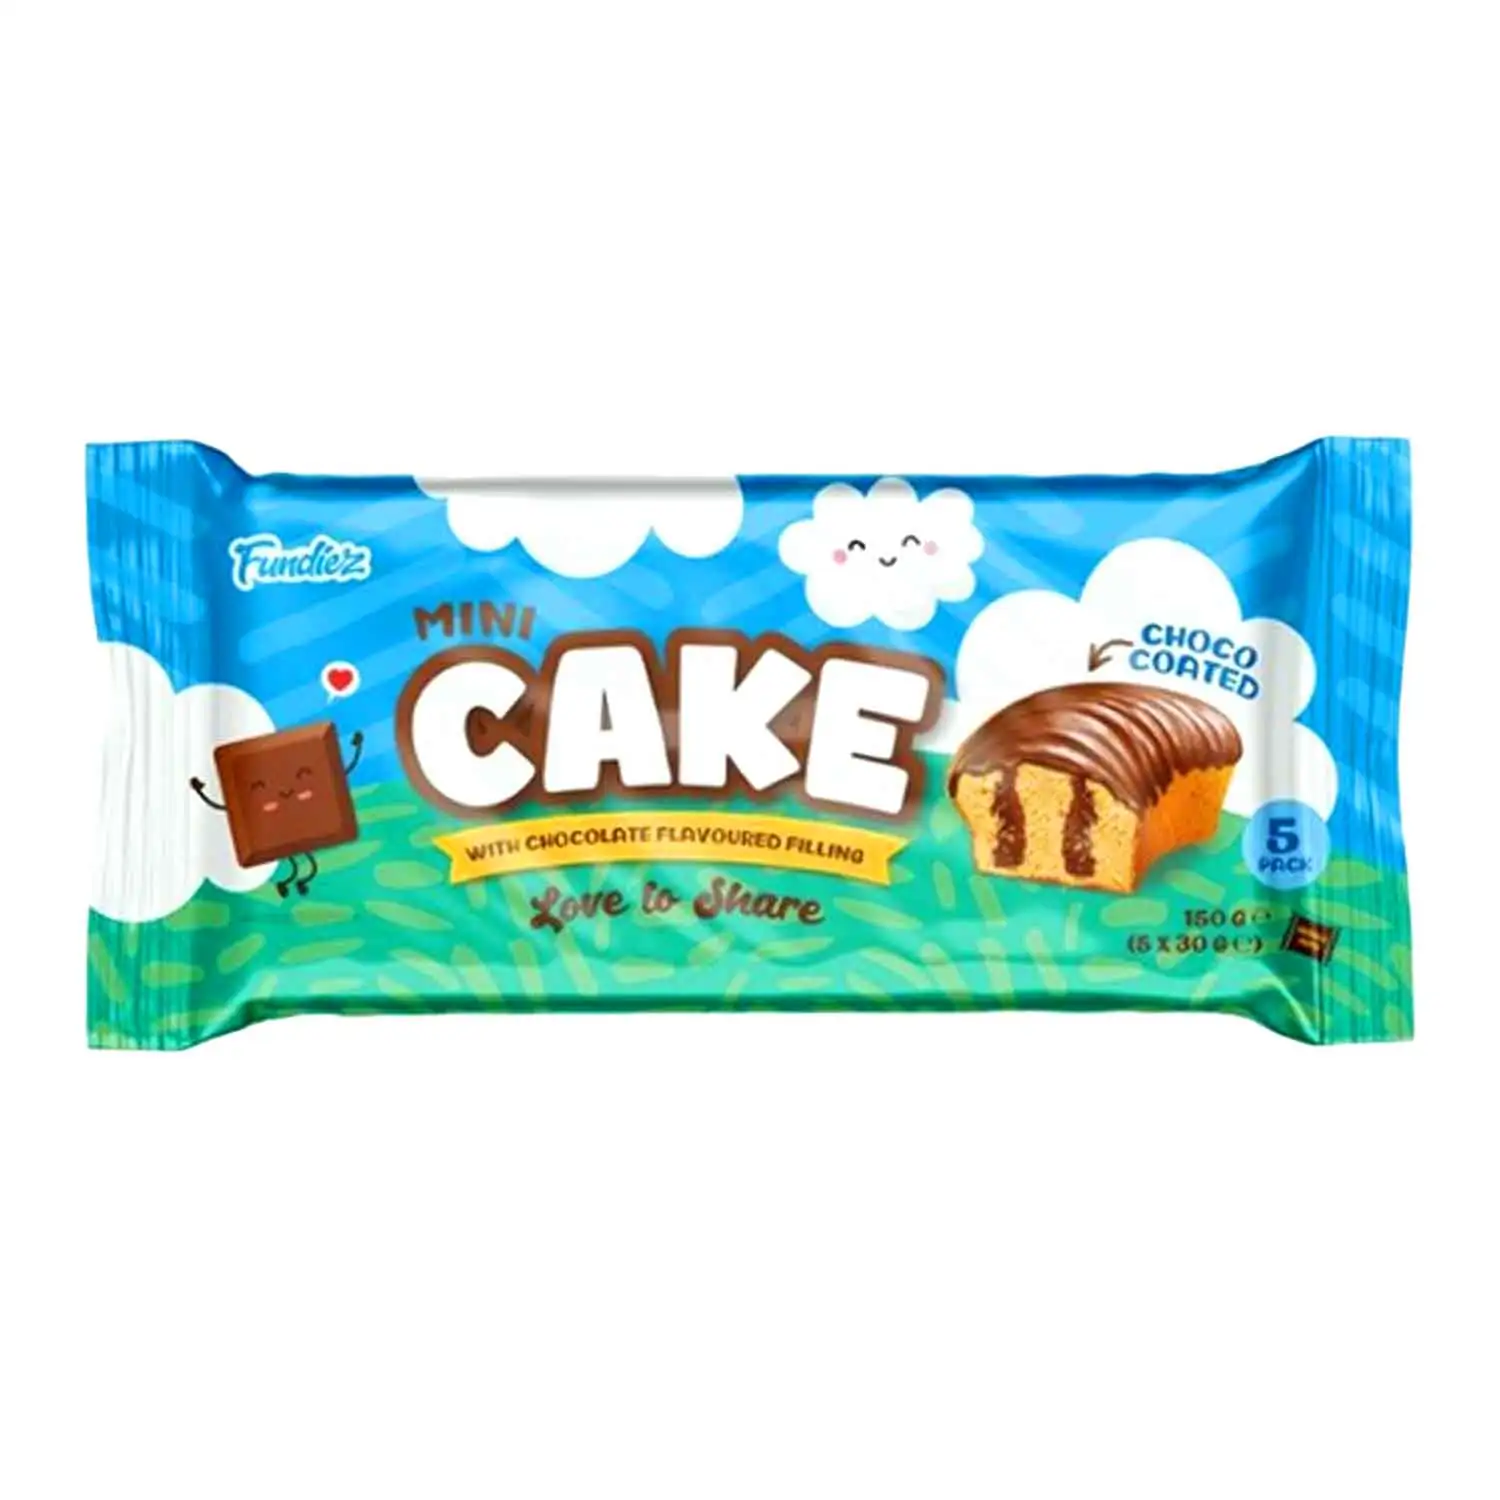 Fundiez mini cake chocolat 5x30g - Buy at Real Tobacco